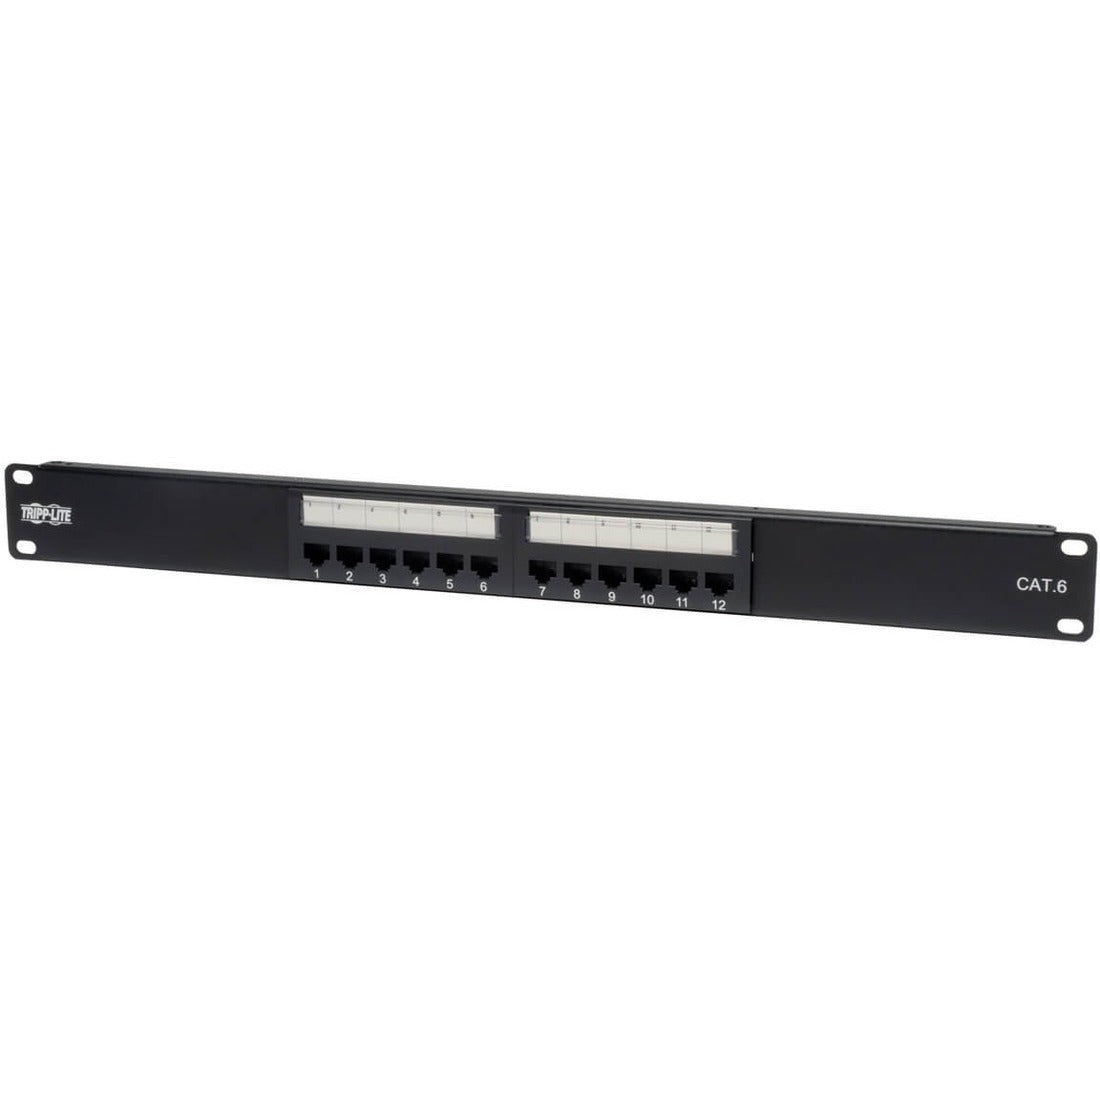 Tripp Lite by Eaton 12-Port 1U Rack-Mount Cat6/Cat5 110 Patch Panel 568B, RJ45 Ethernet, TAA - N252-012